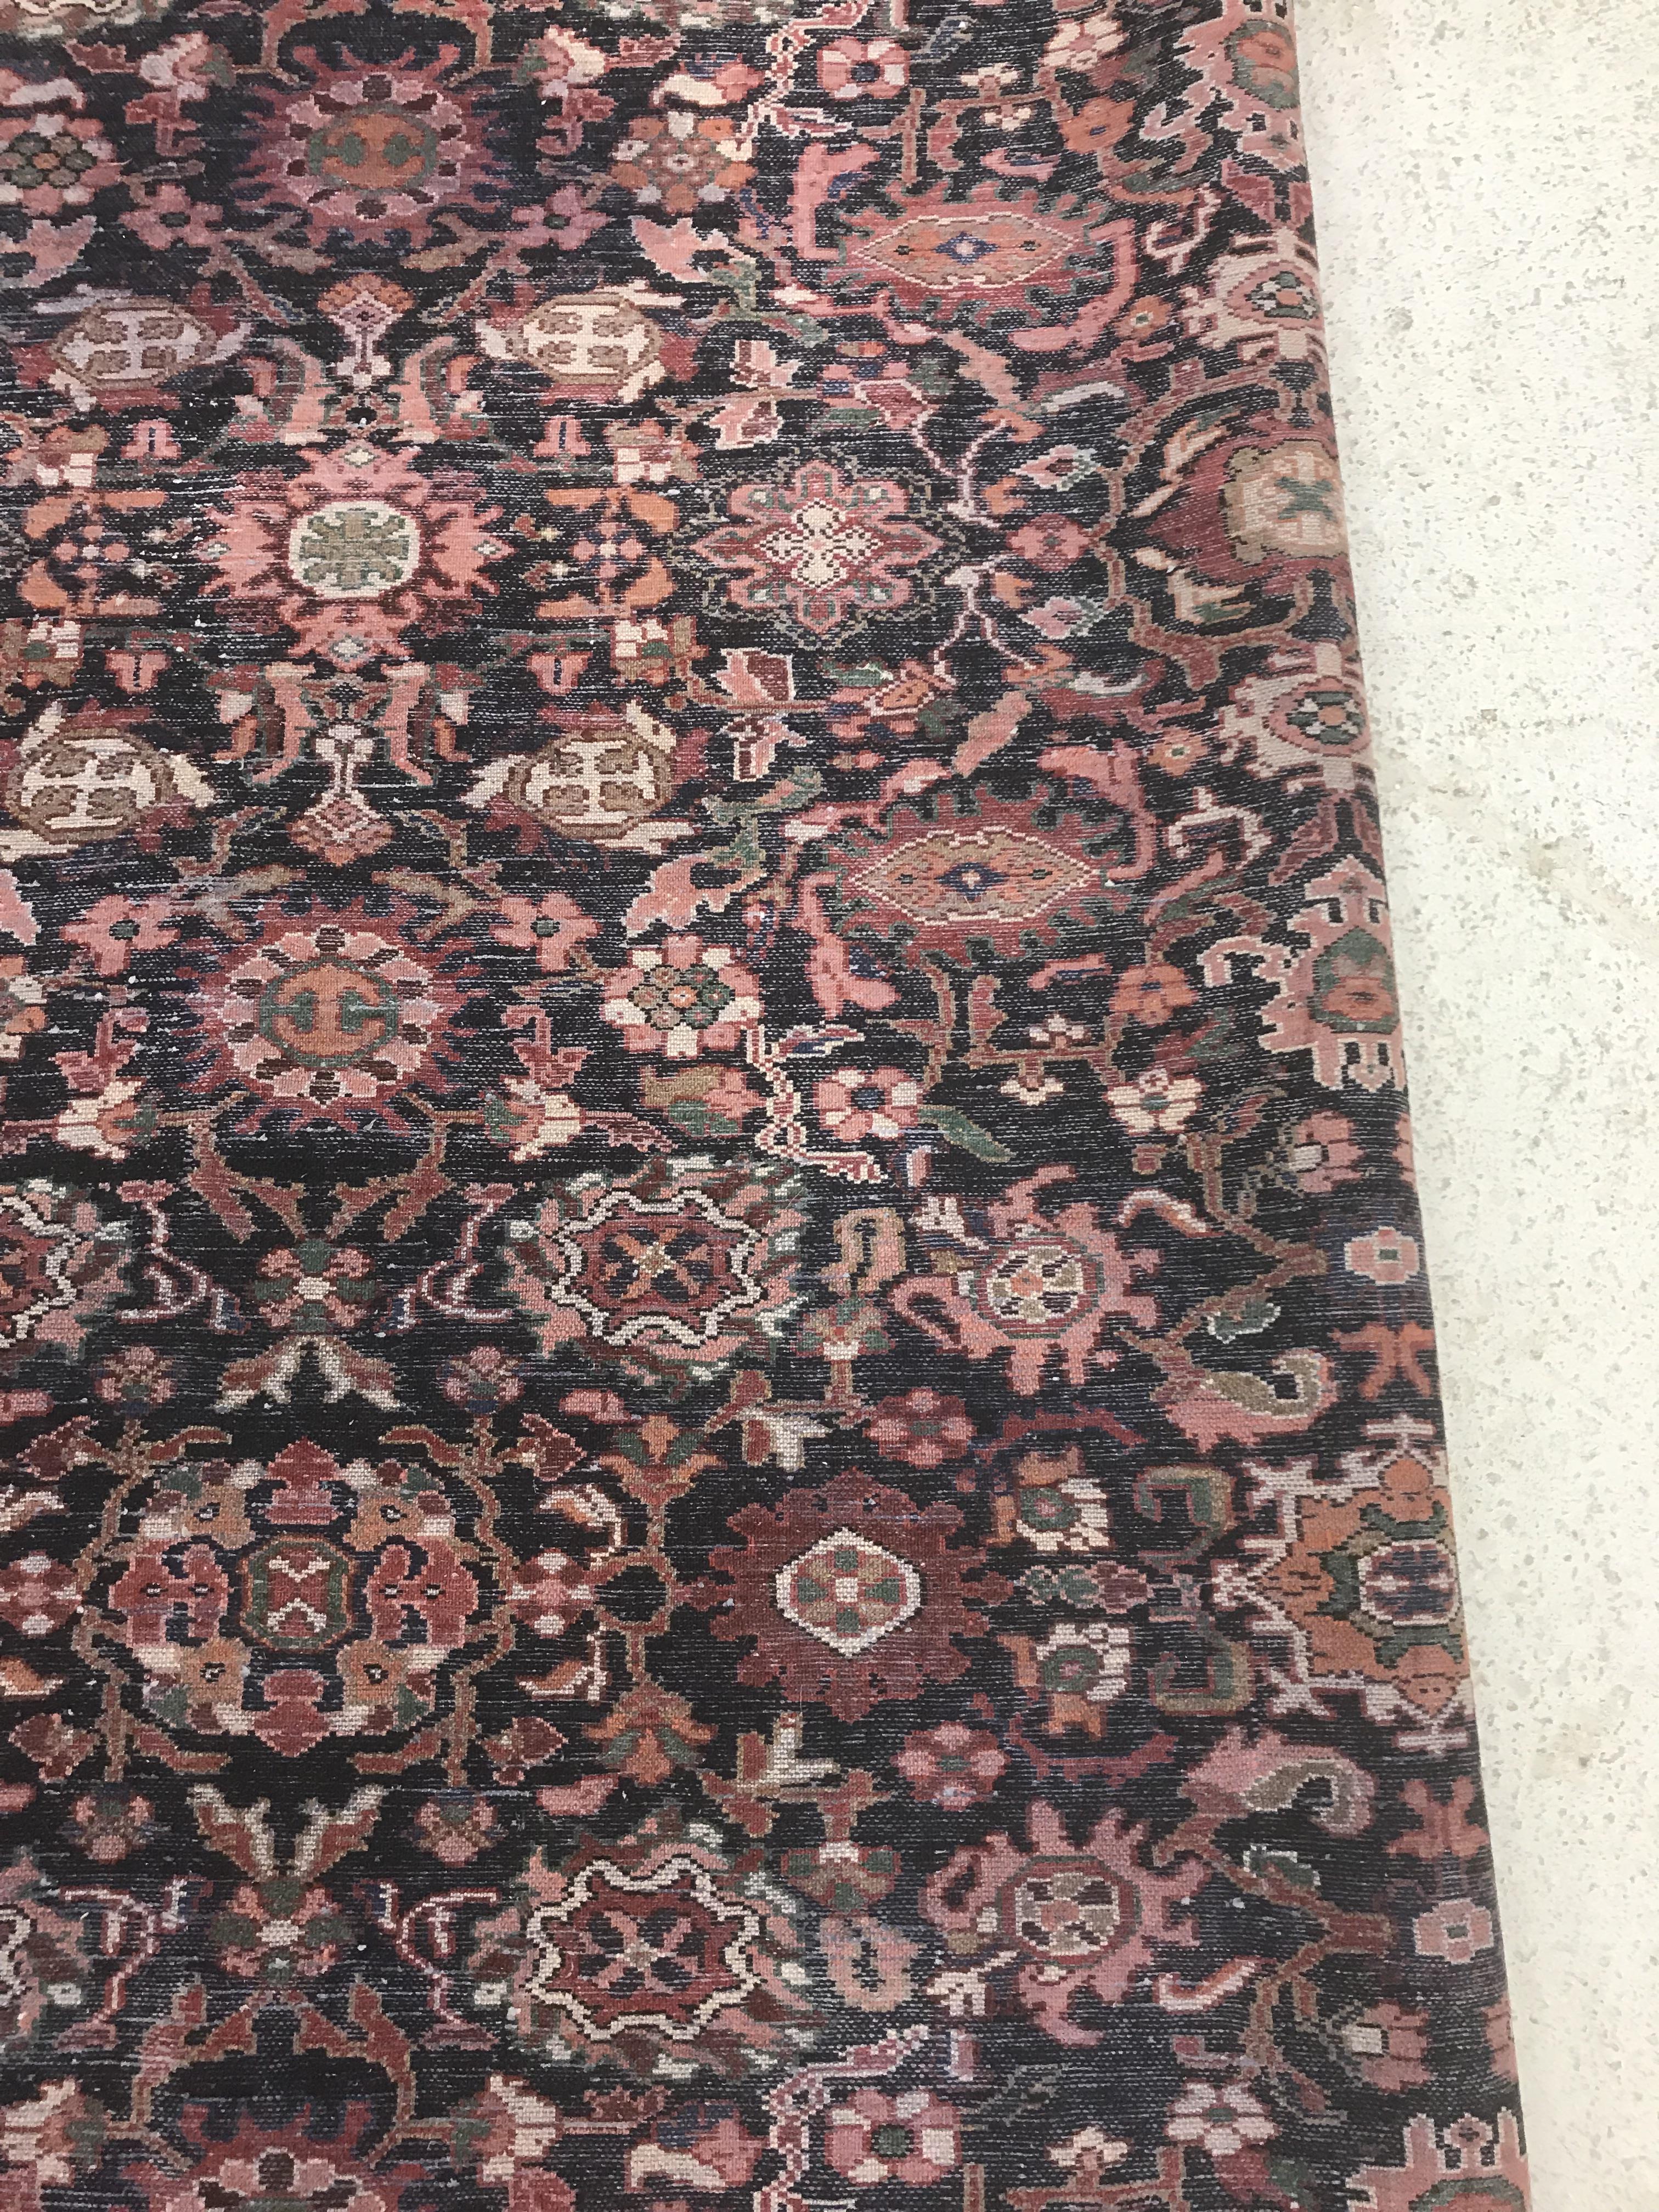 A 20th Century Afghan Kazak carpet, - Image 21 of 36